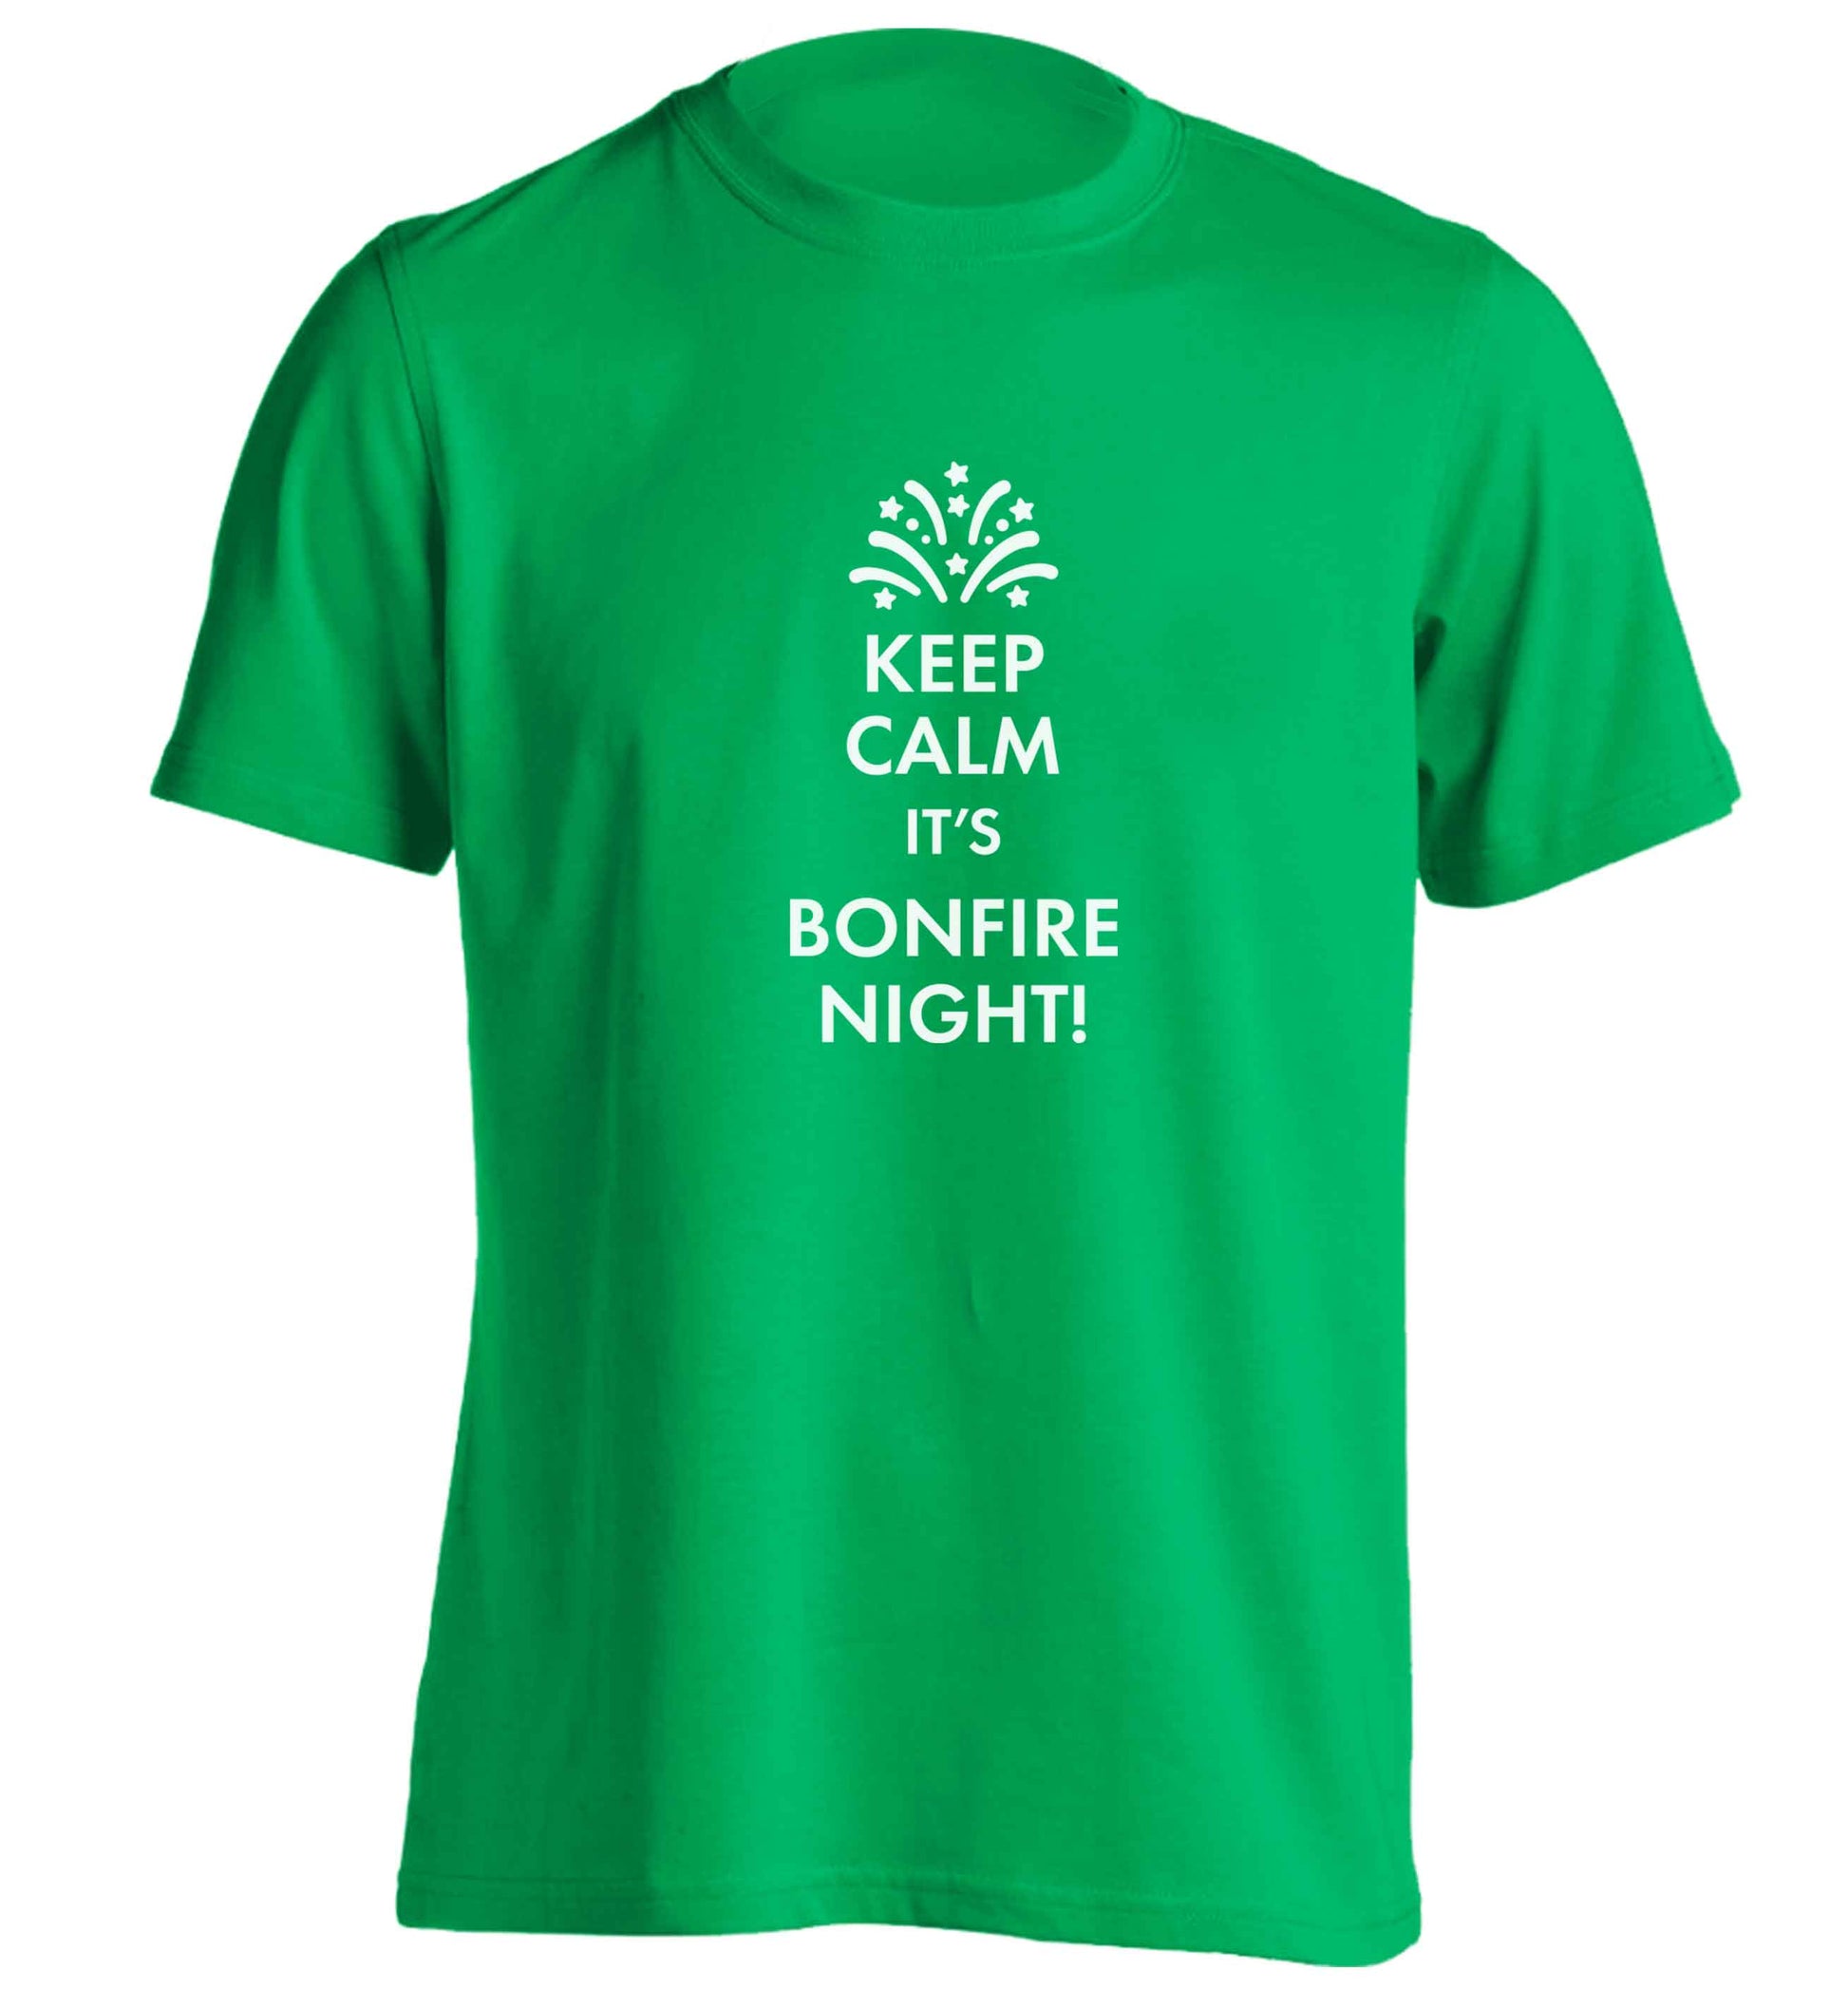 Keep calm its bonfire night adults unisex green Tshirt 2XL